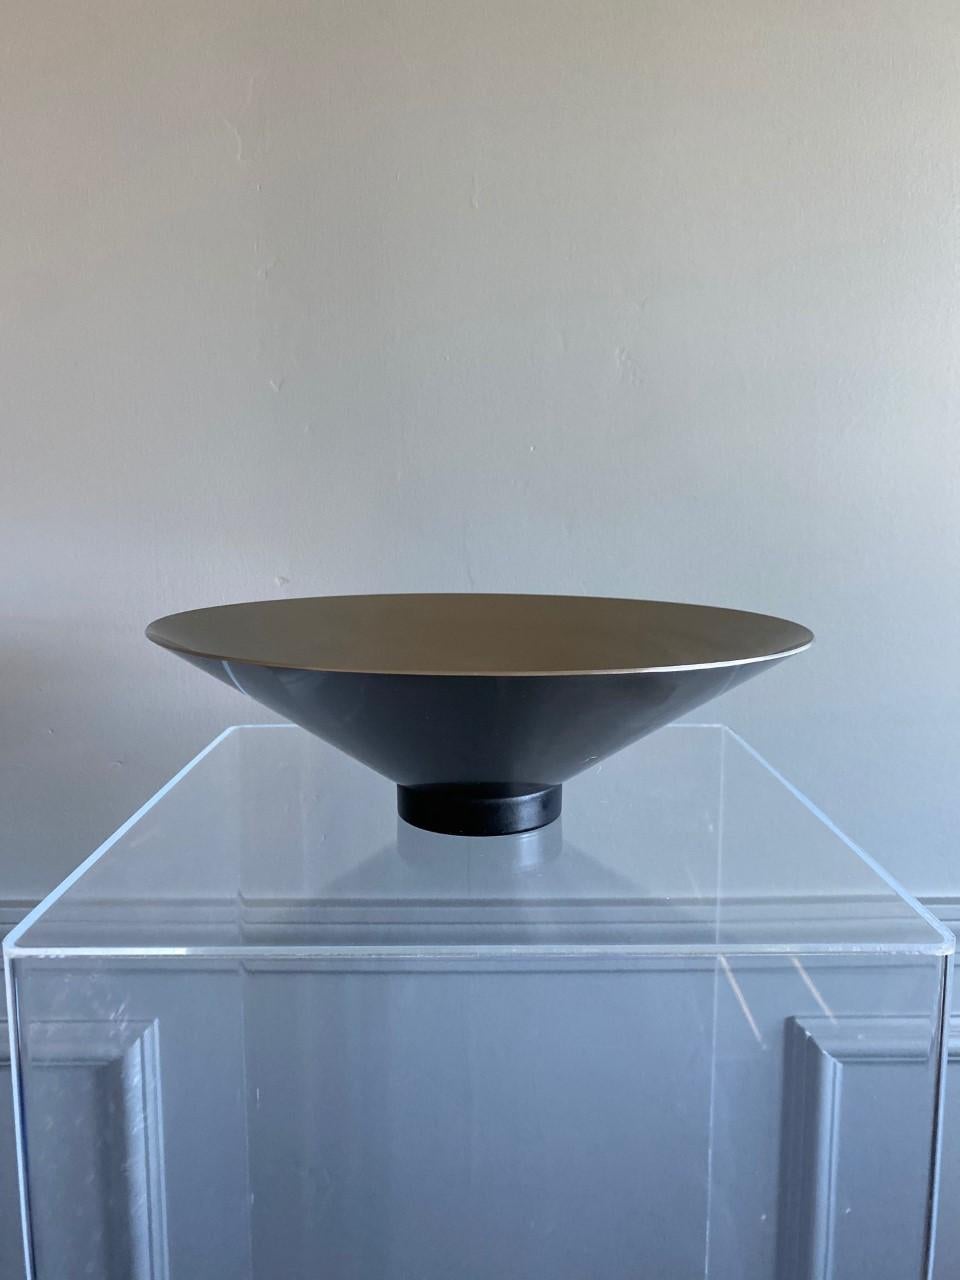 Danish Vintage Stainless Steel “Complet” Bowl by Jørgen Møller for Royal Copenhagen For Sale